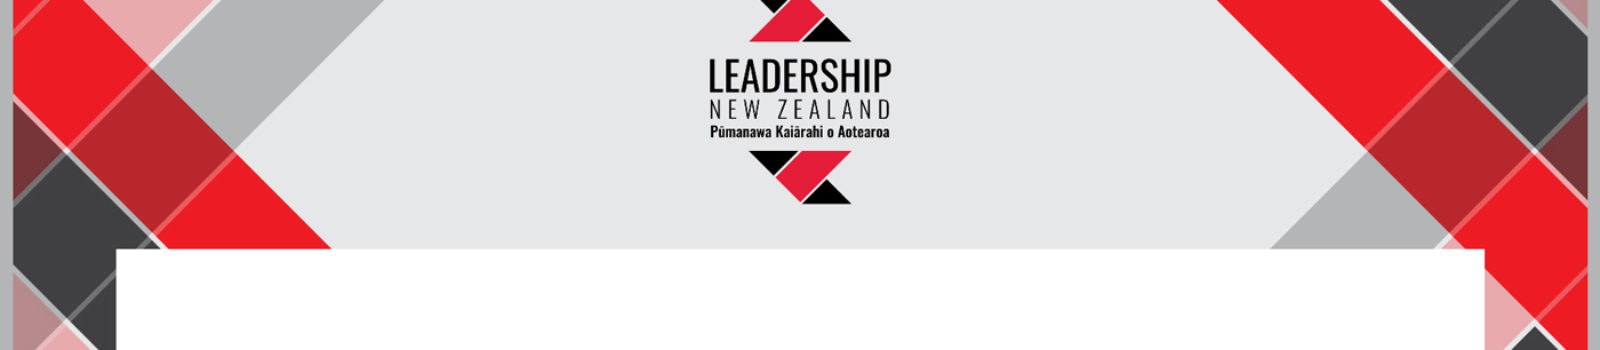 NZ Leadership